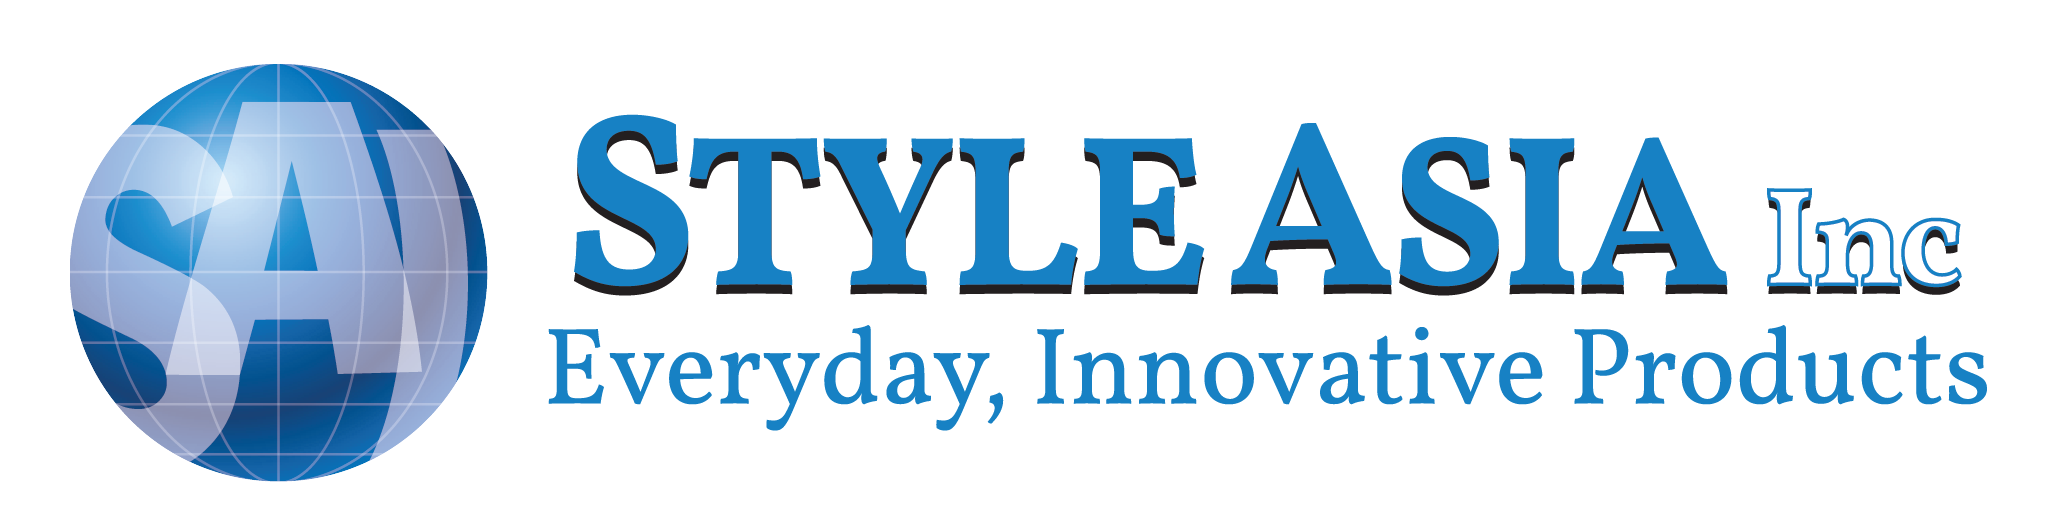 StyleAsia Inc